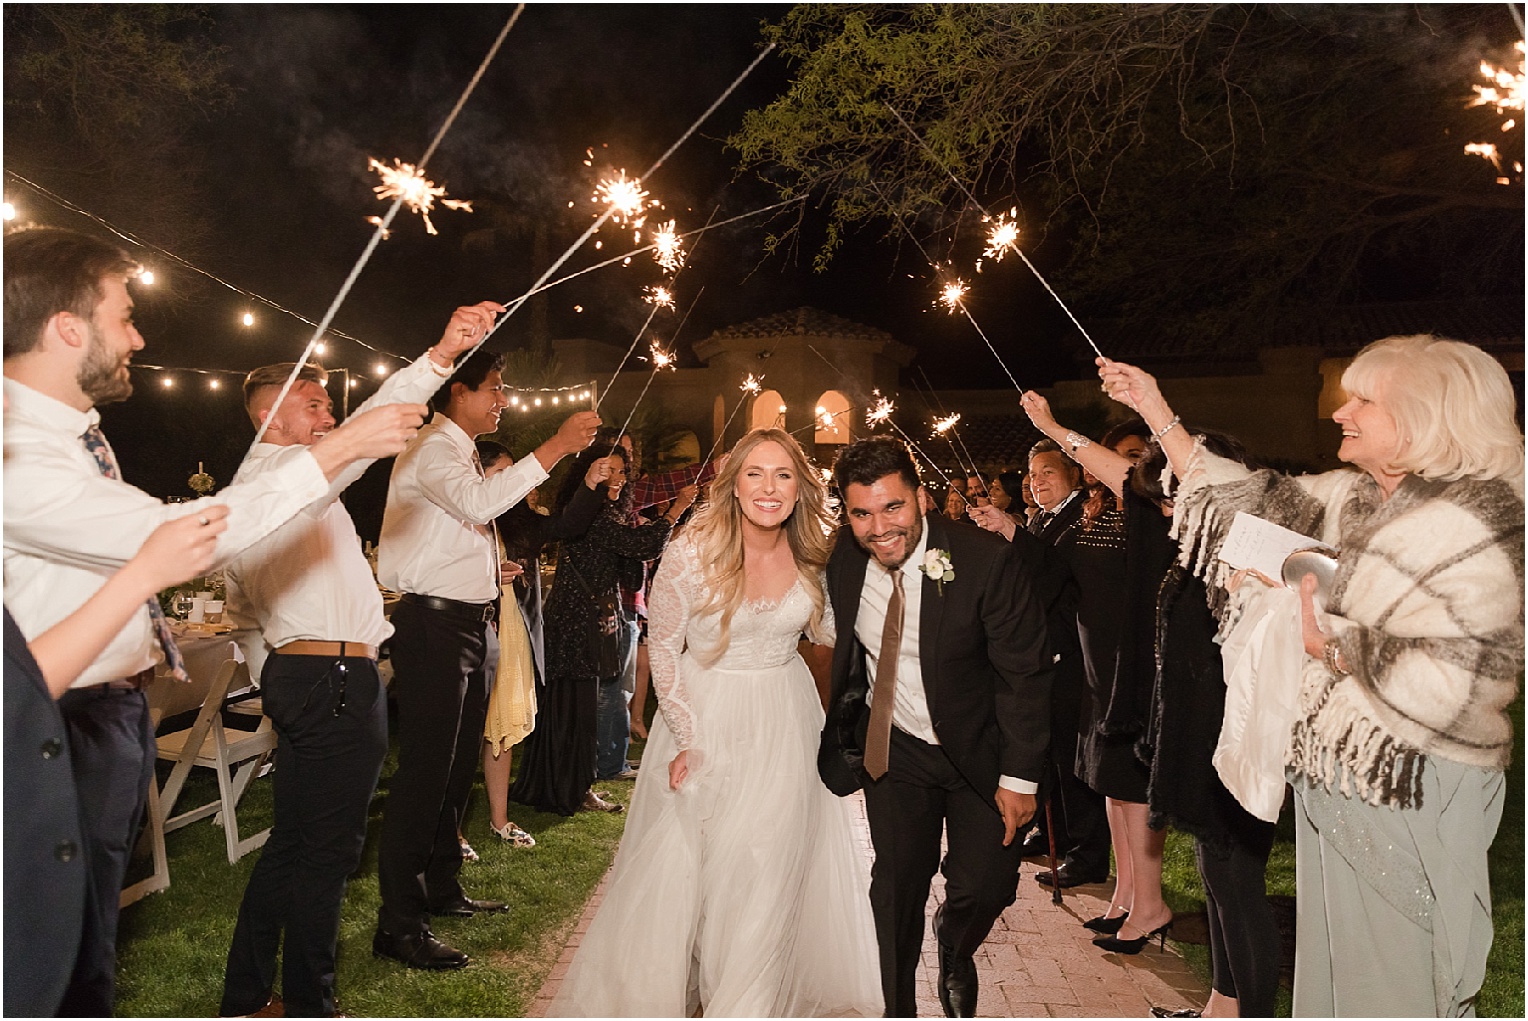 Intimate Backyard Wedding Tucson, AZ Chanel + Eddie outdoor reception sparkler wedding send off